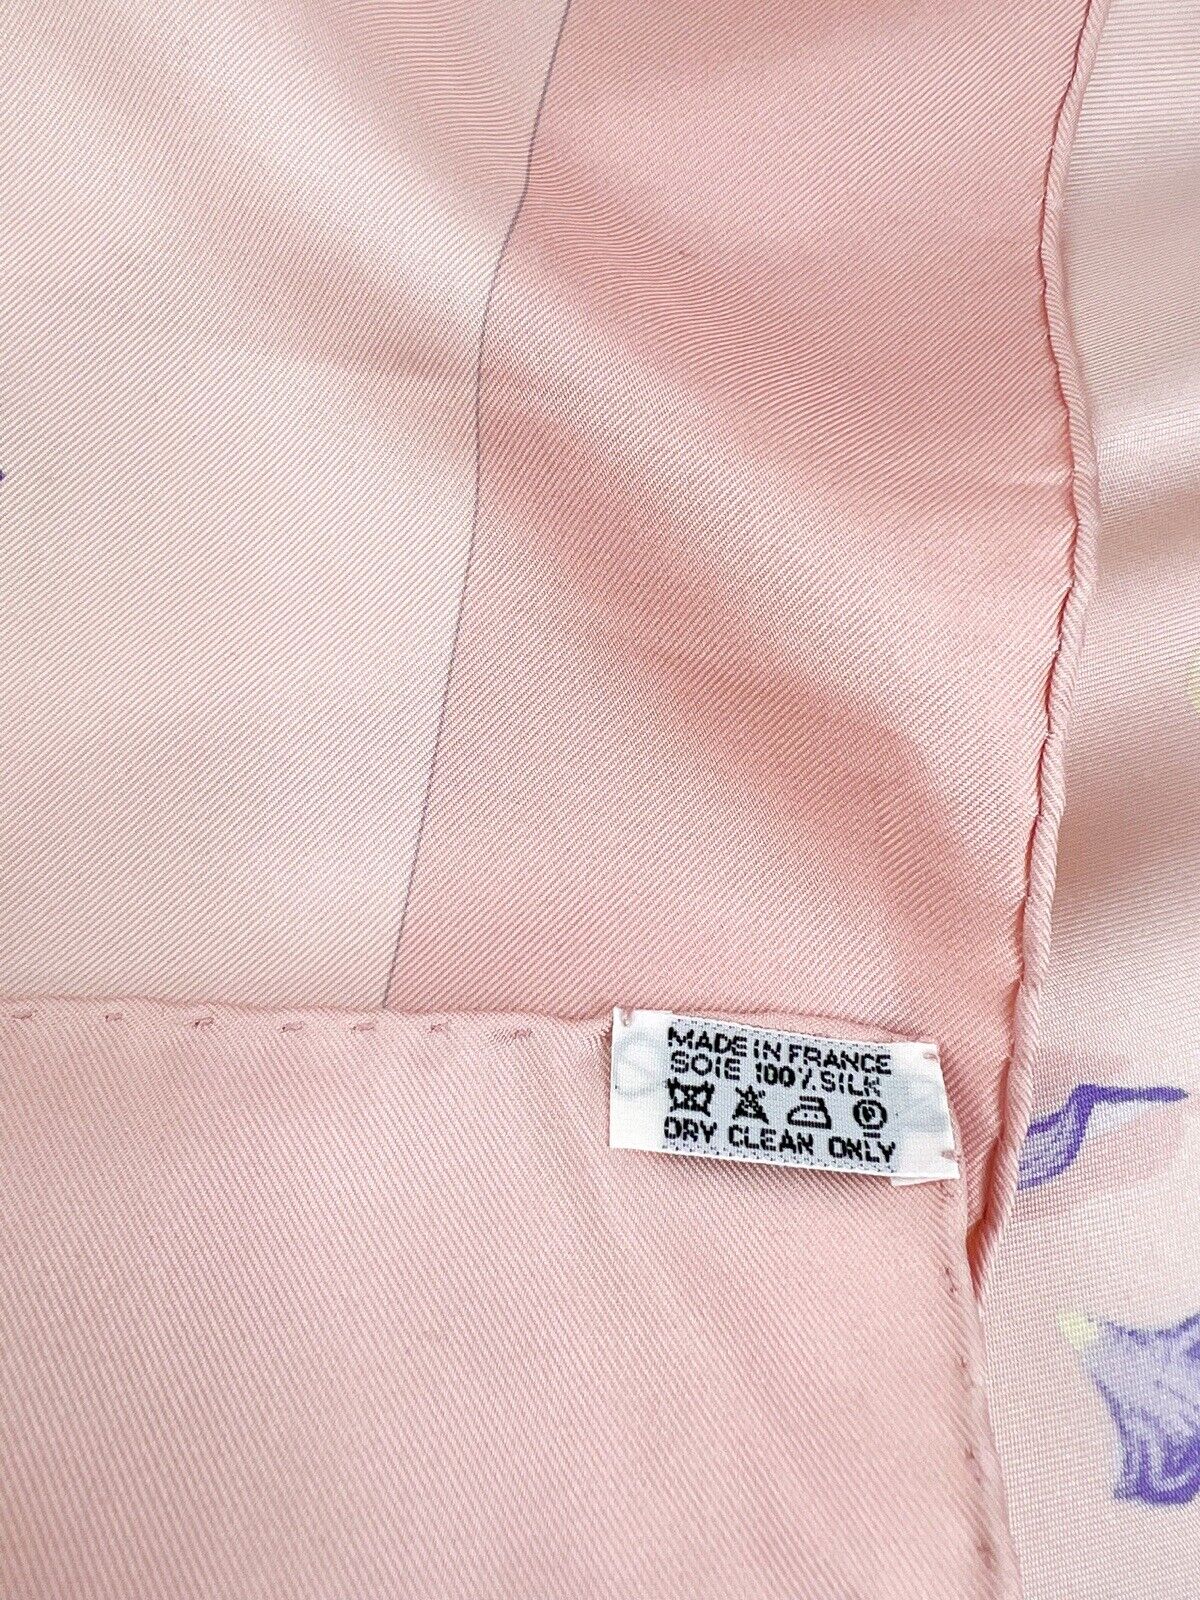 【SOLD OUT】Hermes Silk Pink Scarf Wrap “Des Fleurs pour de Dire” Vintage Made in France